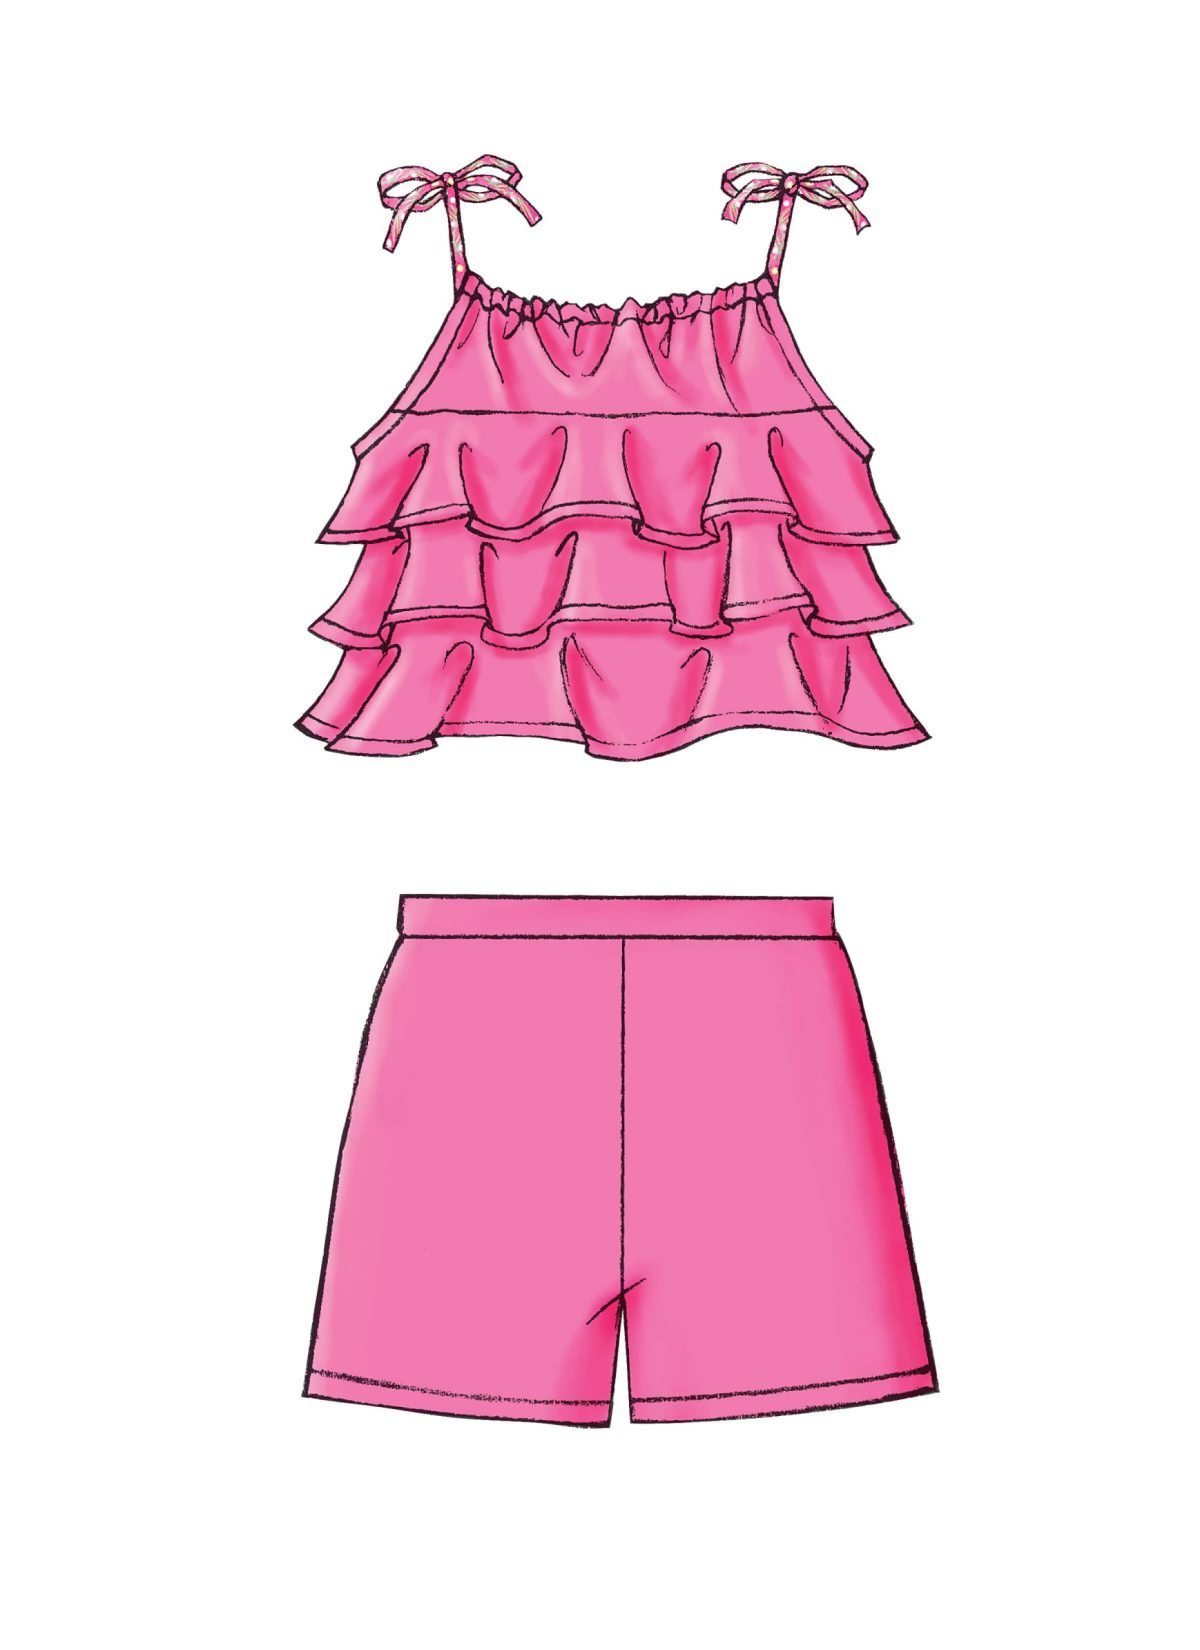 Butterick Sewing Pattern B4503 Children's/Girls' Top, Skort and Shorts